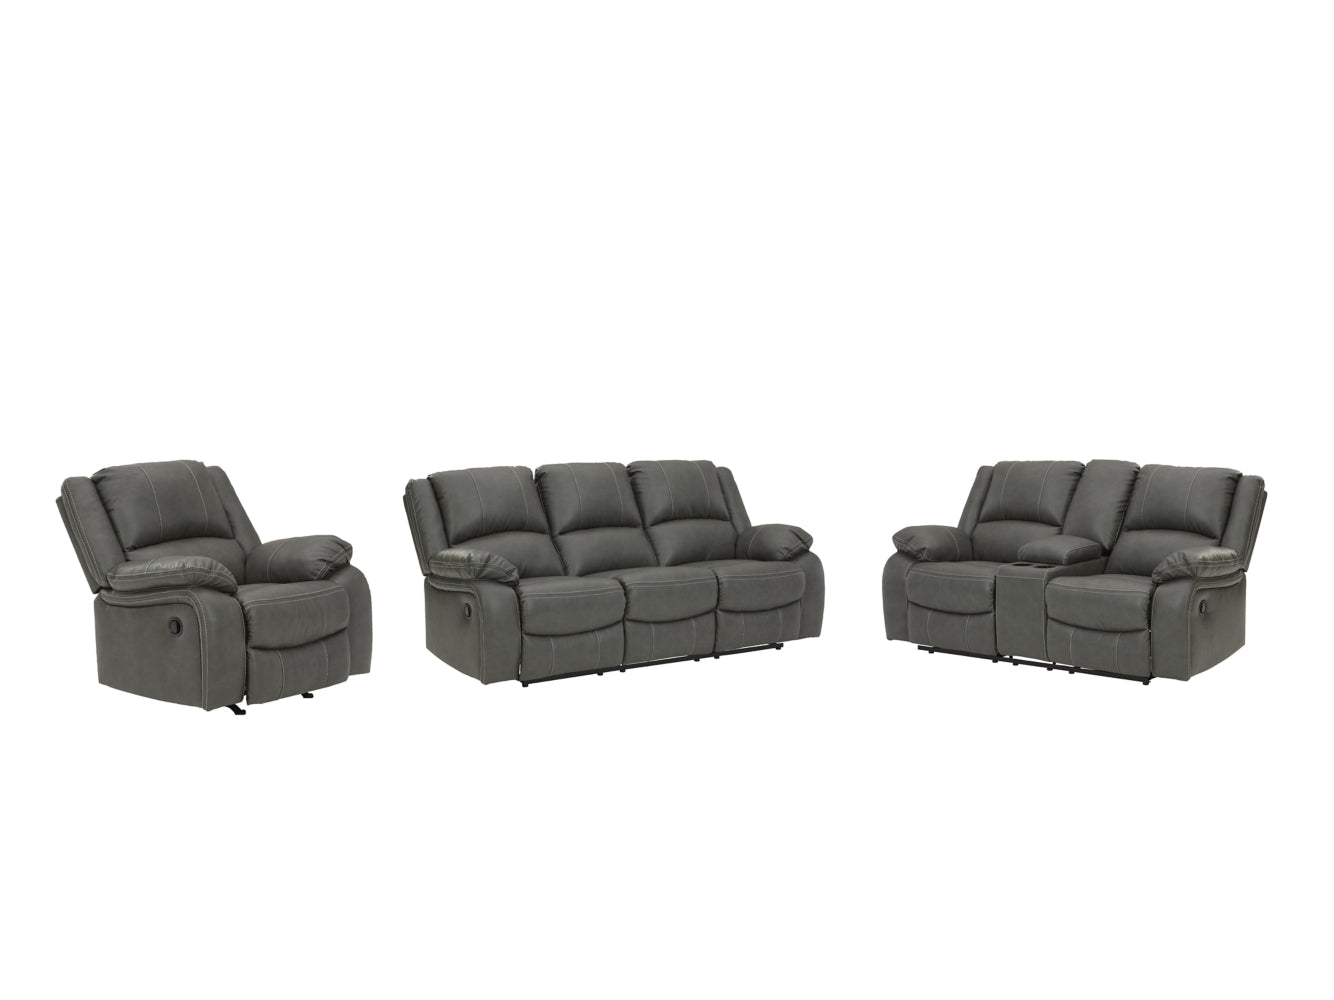 Calderwell Sofa, Loveseat and Recliner - PKG007328 - furniture place usa